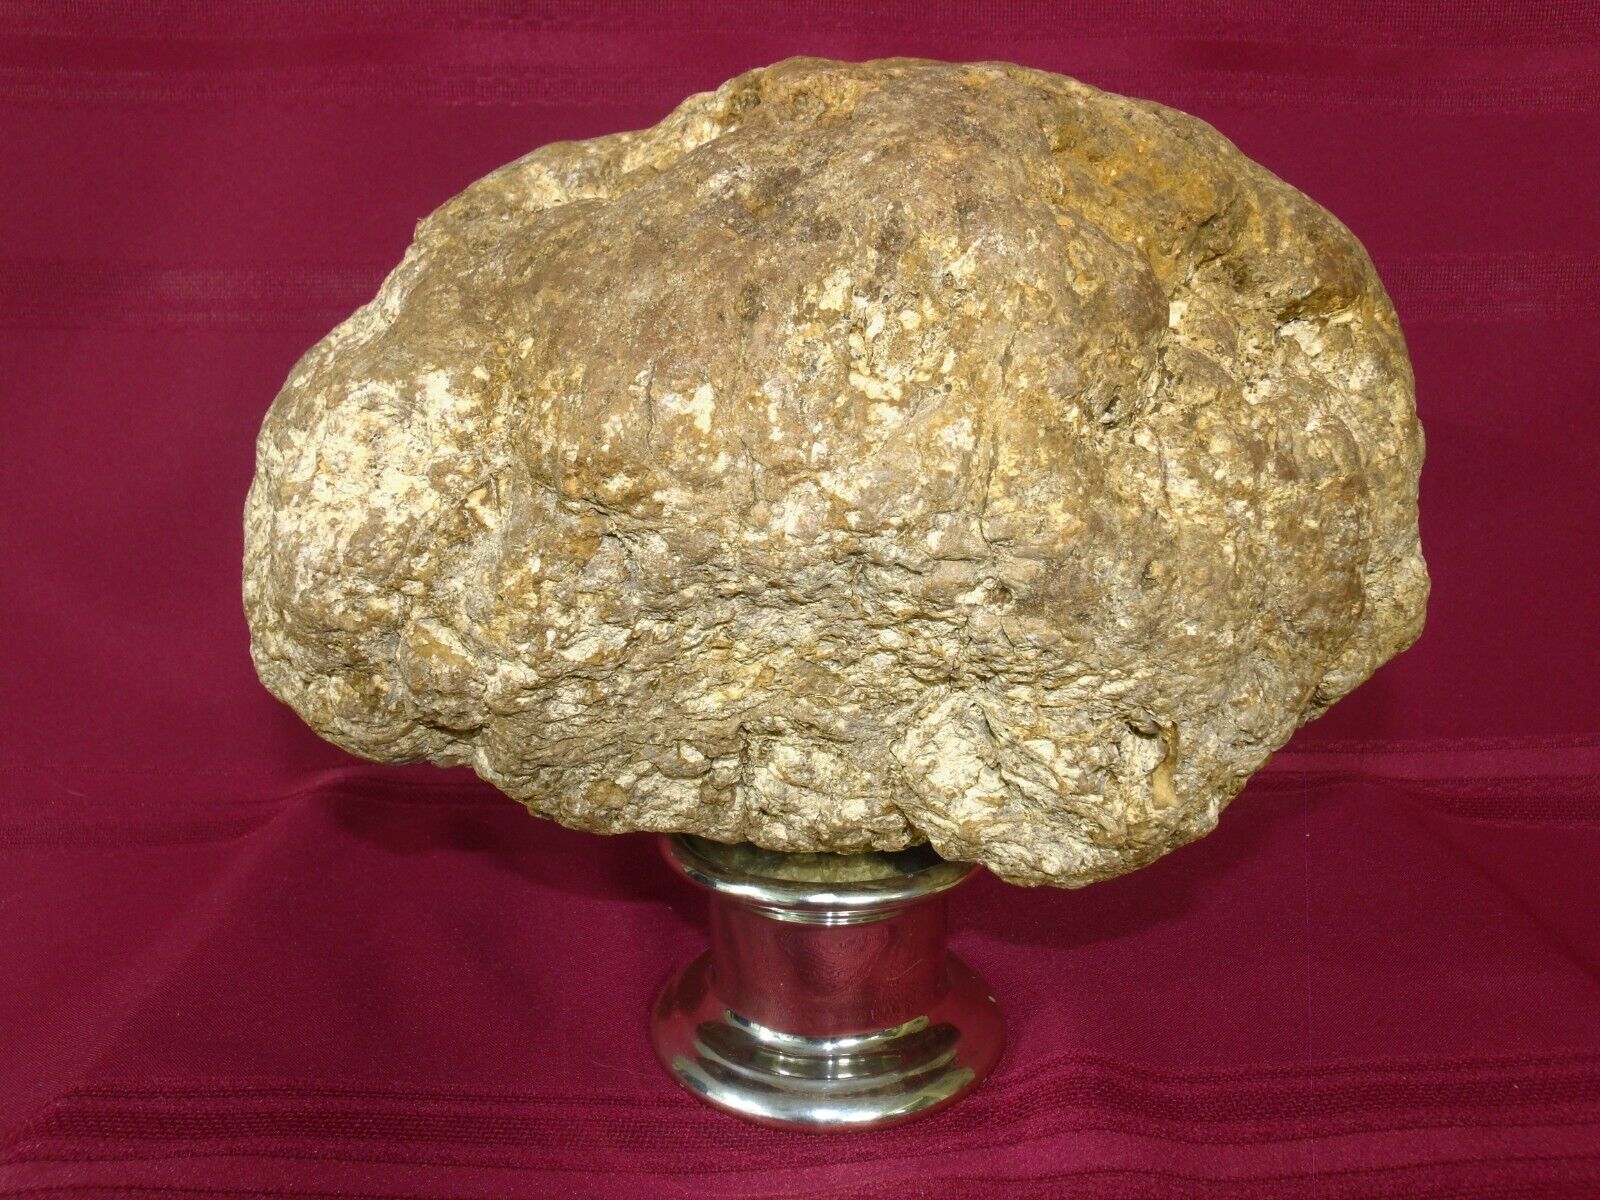 Extra Large 28.8 Pound Whole Kentucky Crystal Quartz Geode Rare Unique Gift